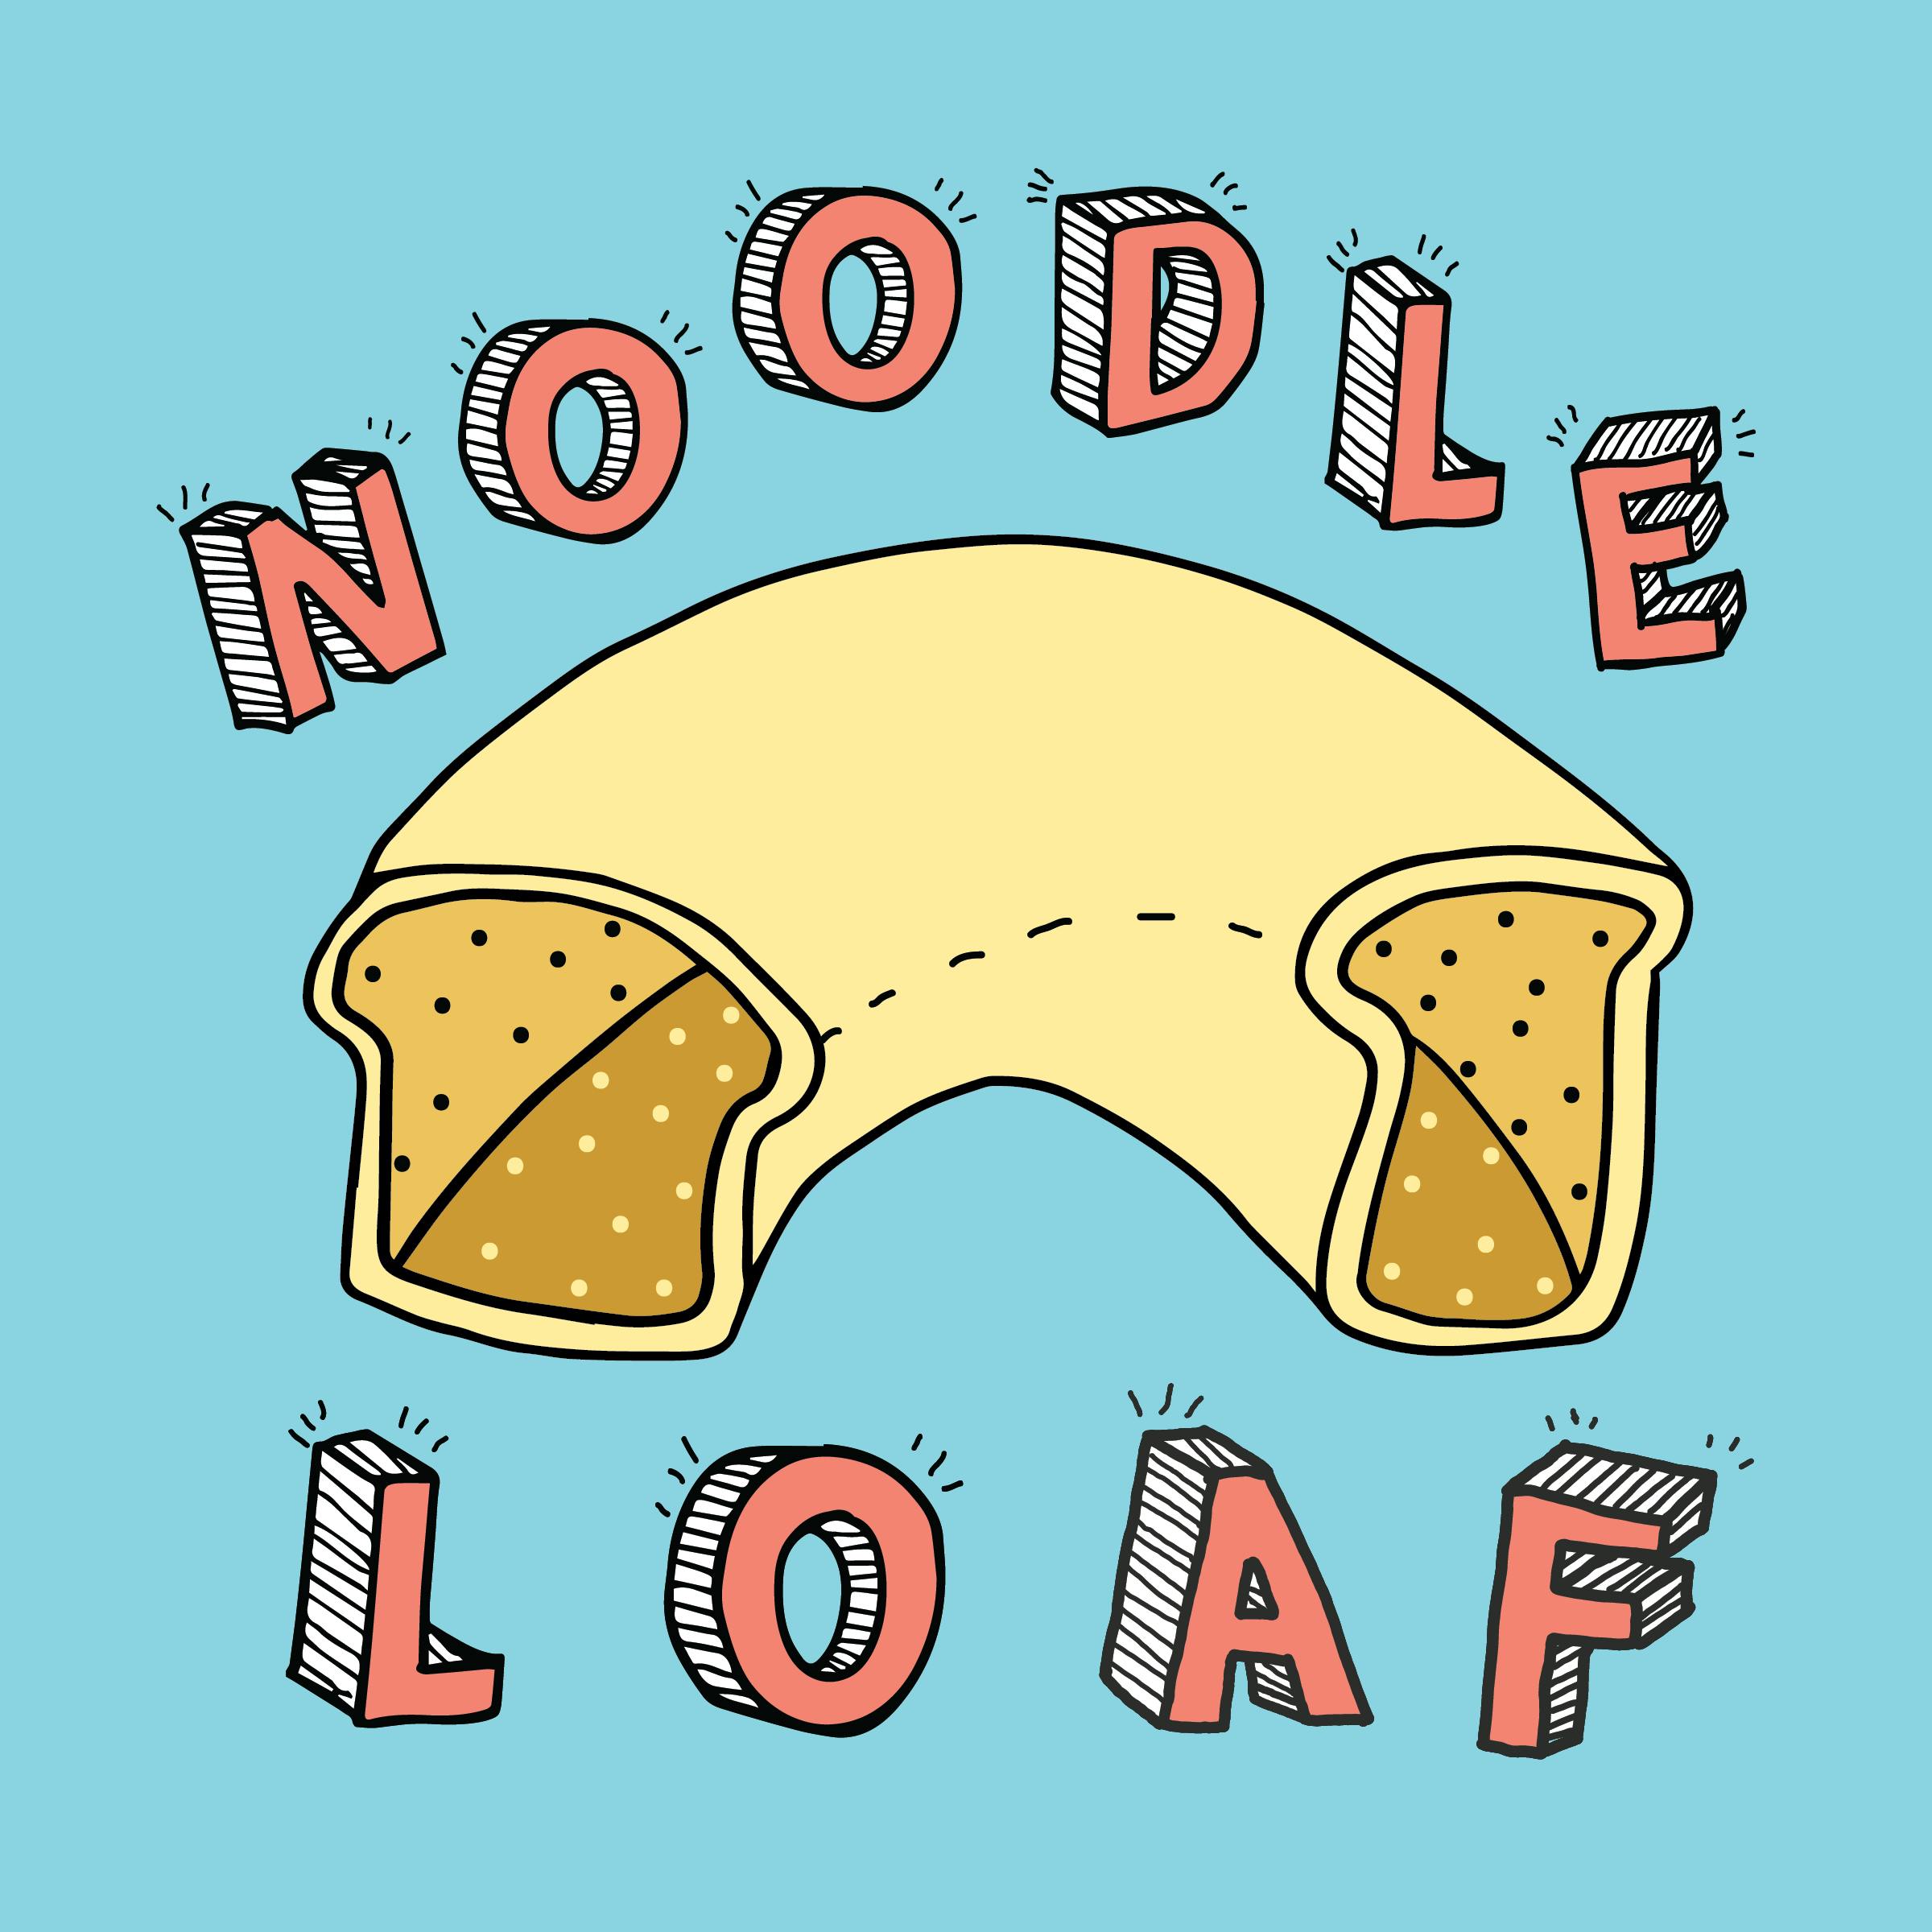 Noodle Loaf - Music Education Podcast for Kids podcast